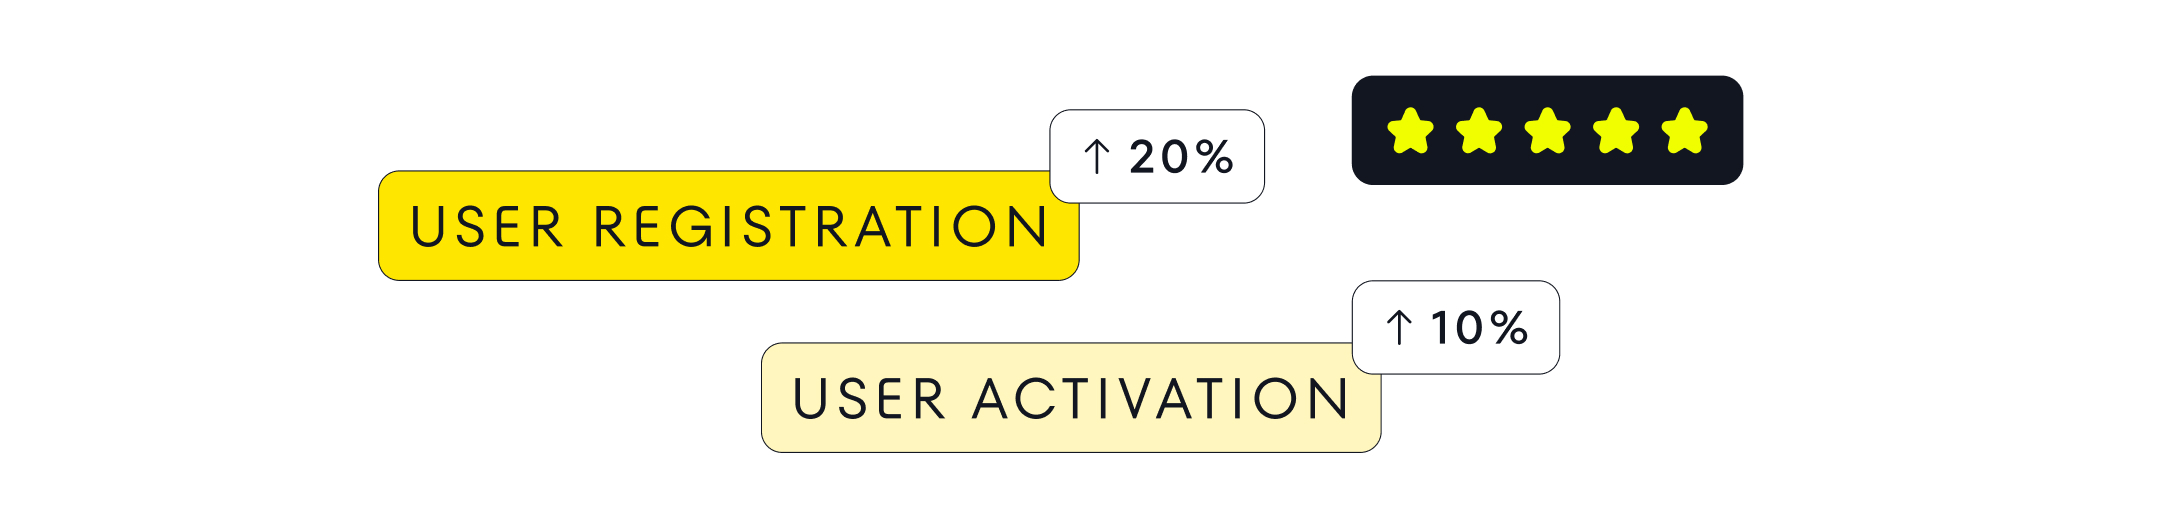 User registration +20%, User activation +10%, 5-star ratings.